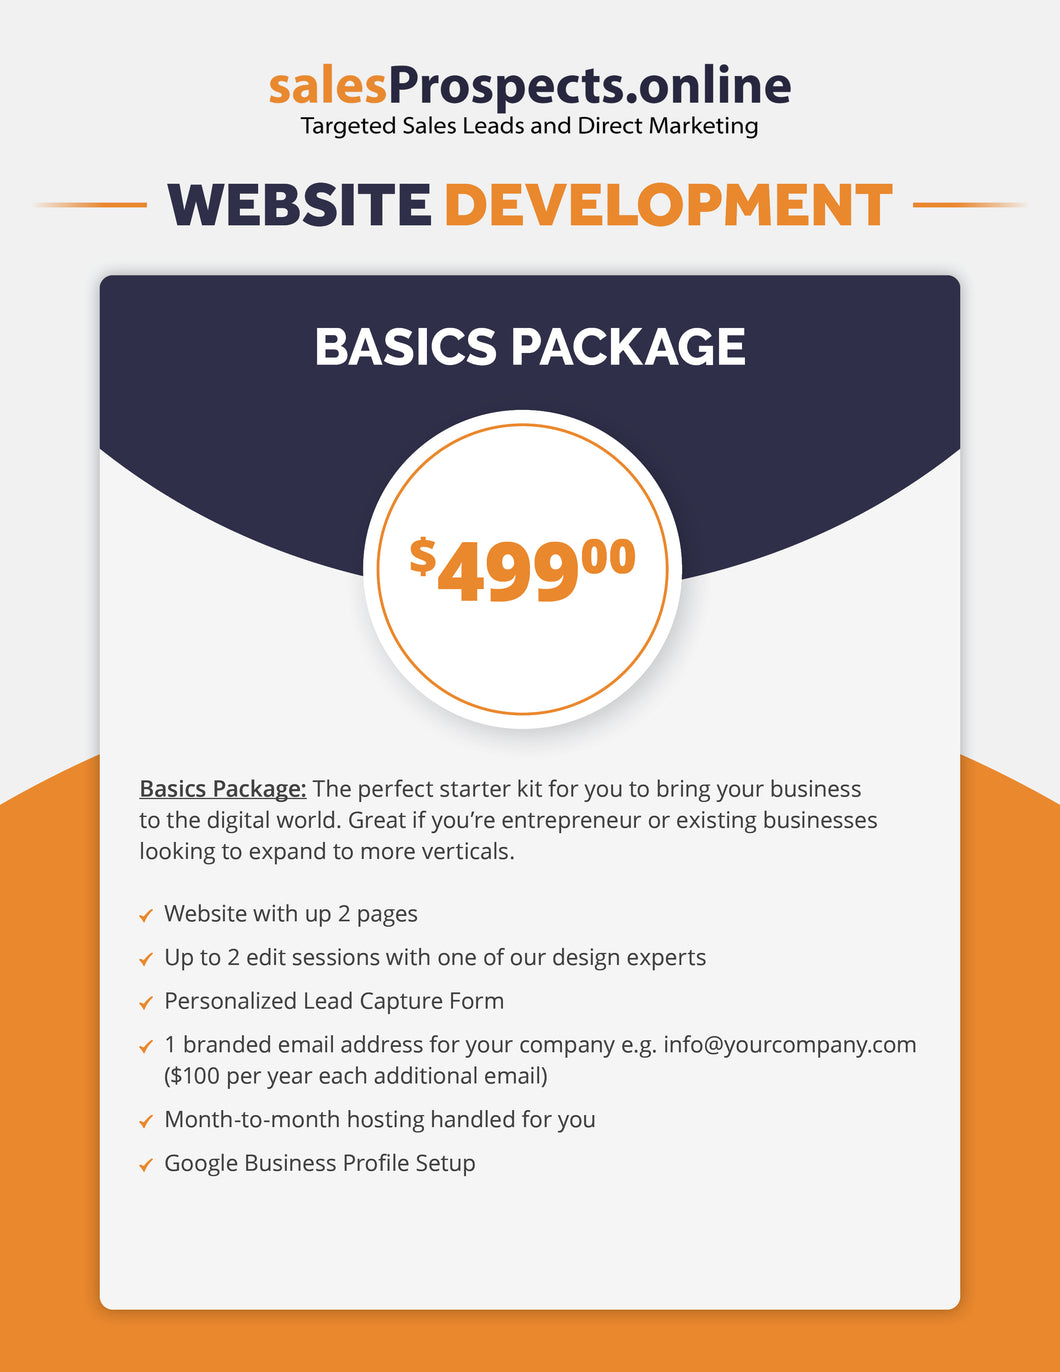 Website Development: Basics Package